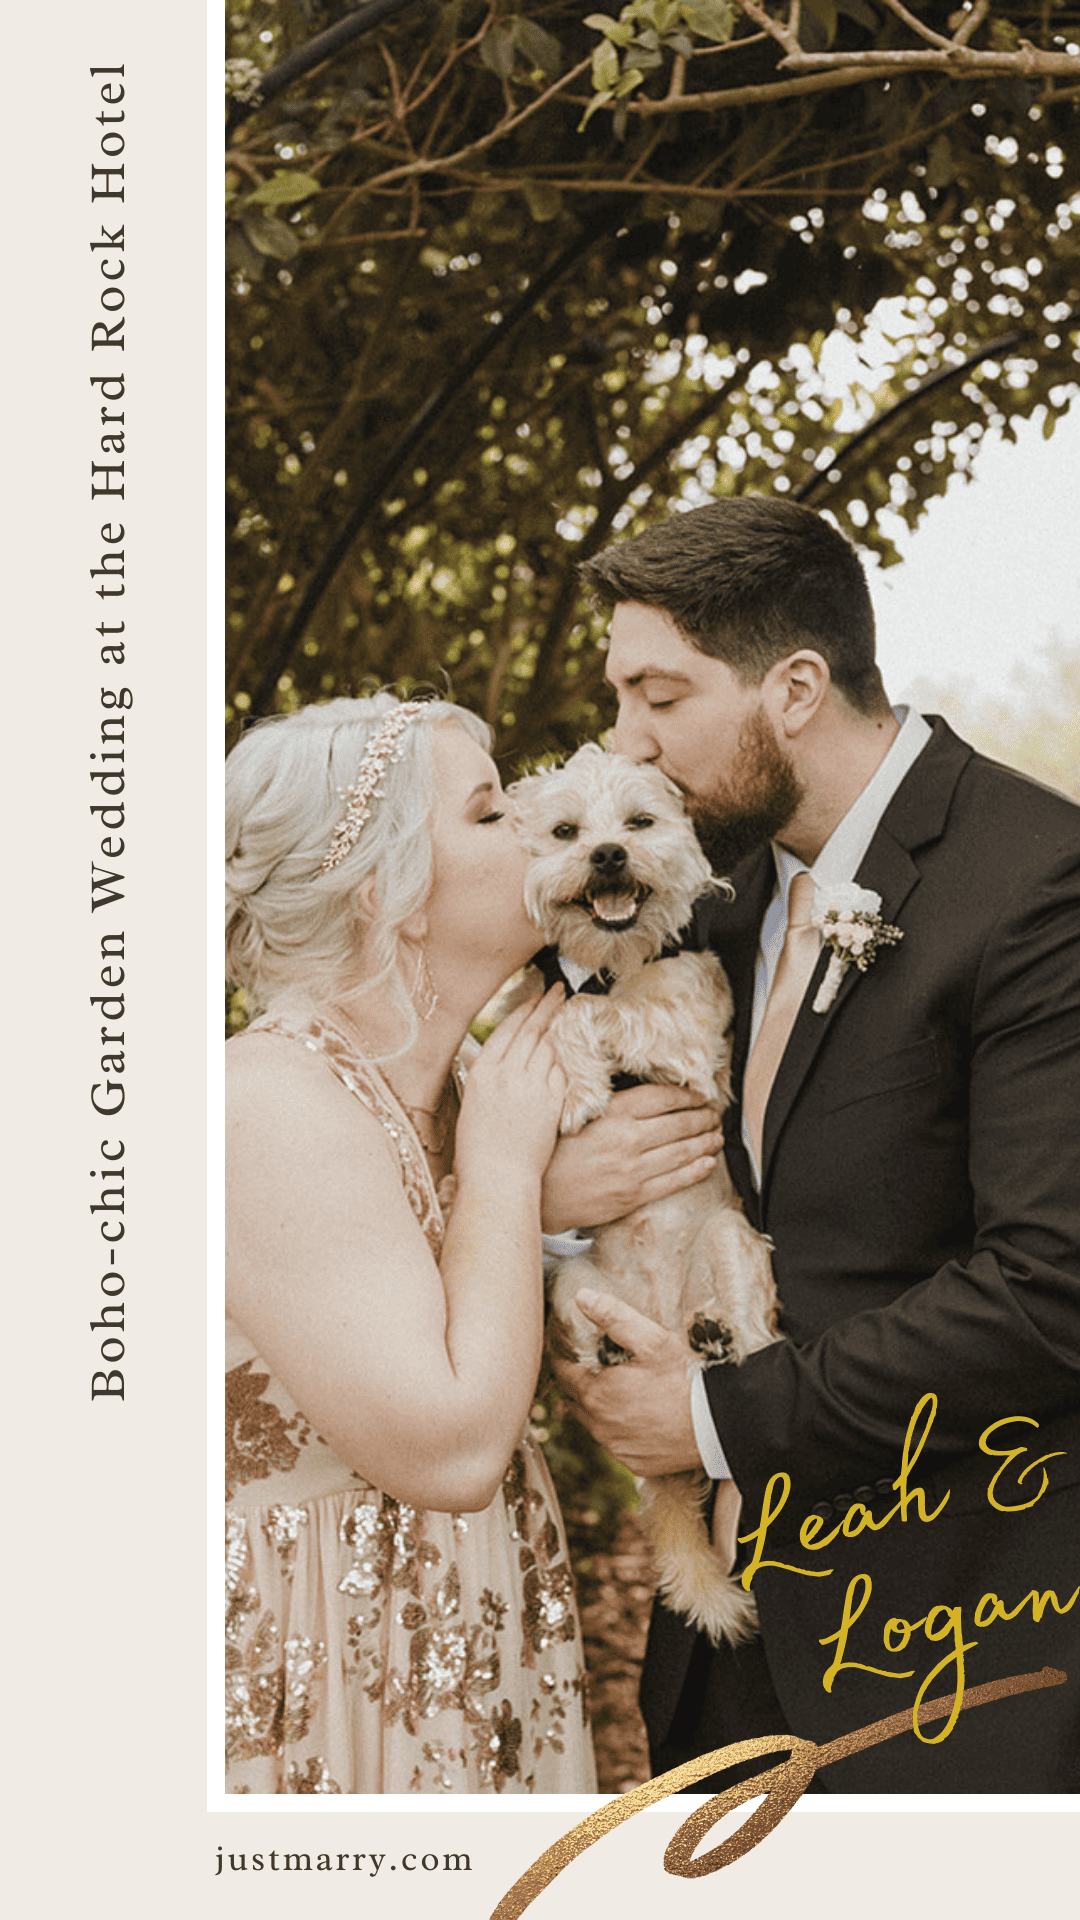 Garden Wedding - Just Marry Weddings - Josie Brooks Photography - Pinterest Graphic